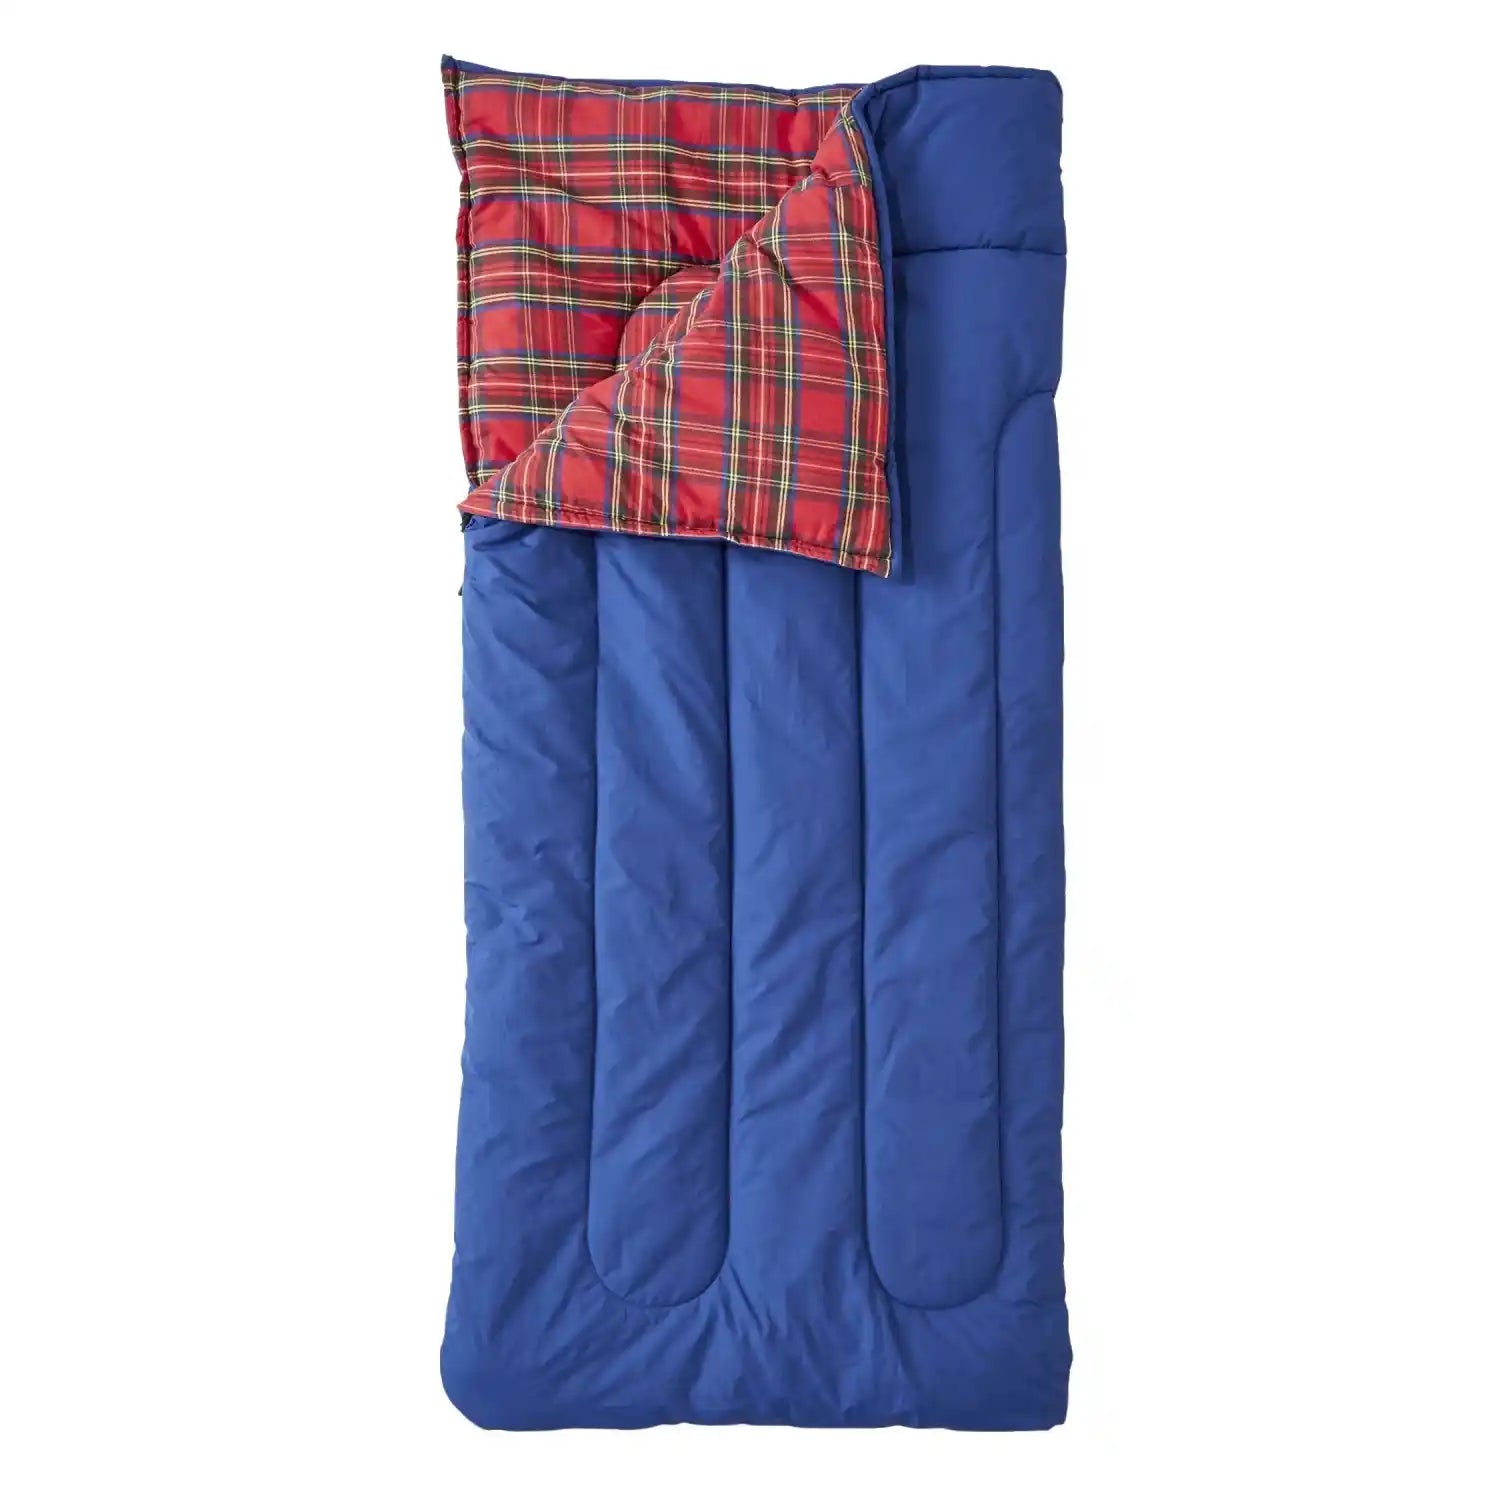 L.L. Bean K's Flannel Lined Camp Sleeping Bag, 40°, Regatta Blue Royal, top view